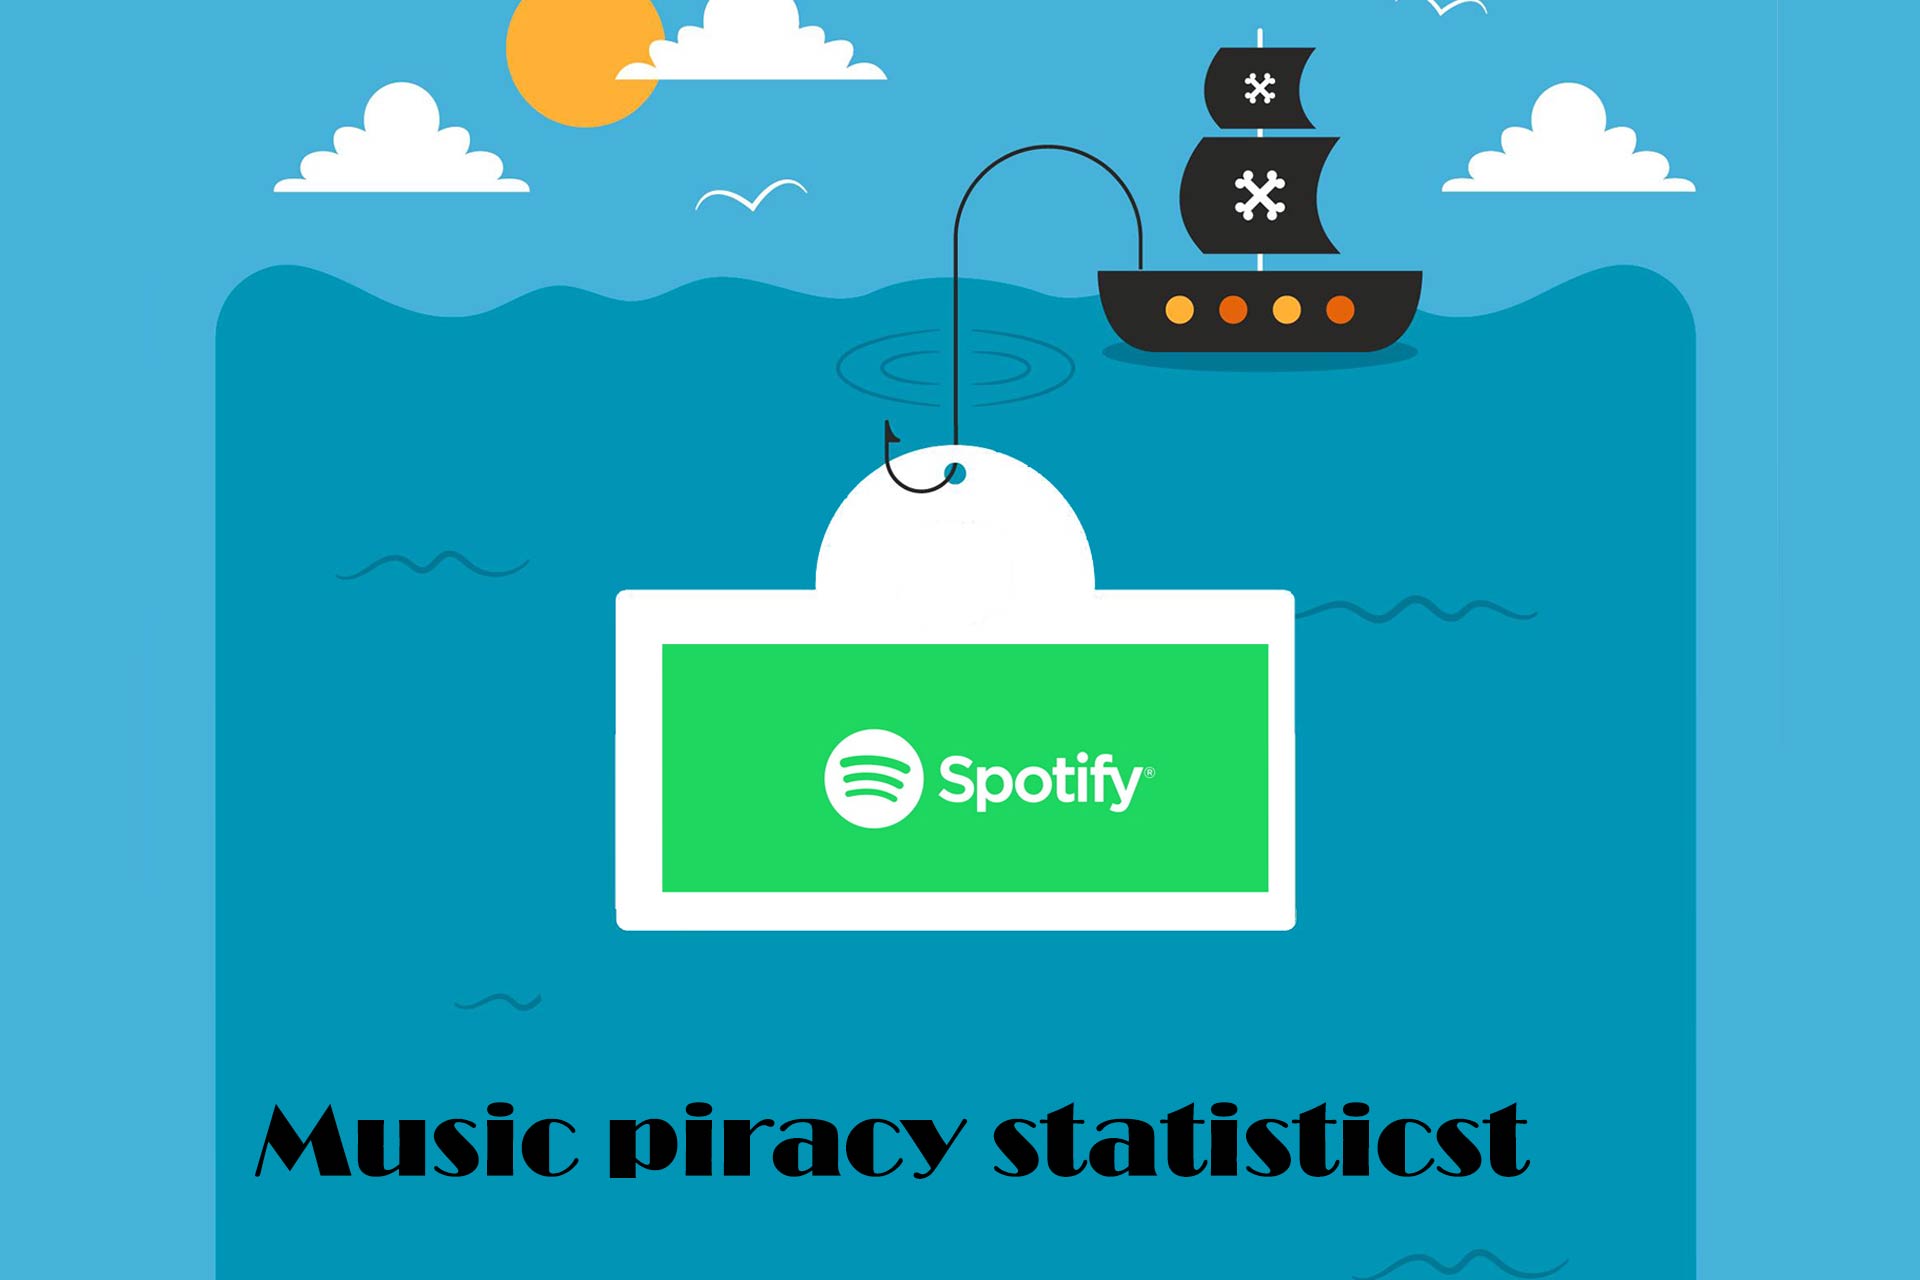 Music piracy statistics